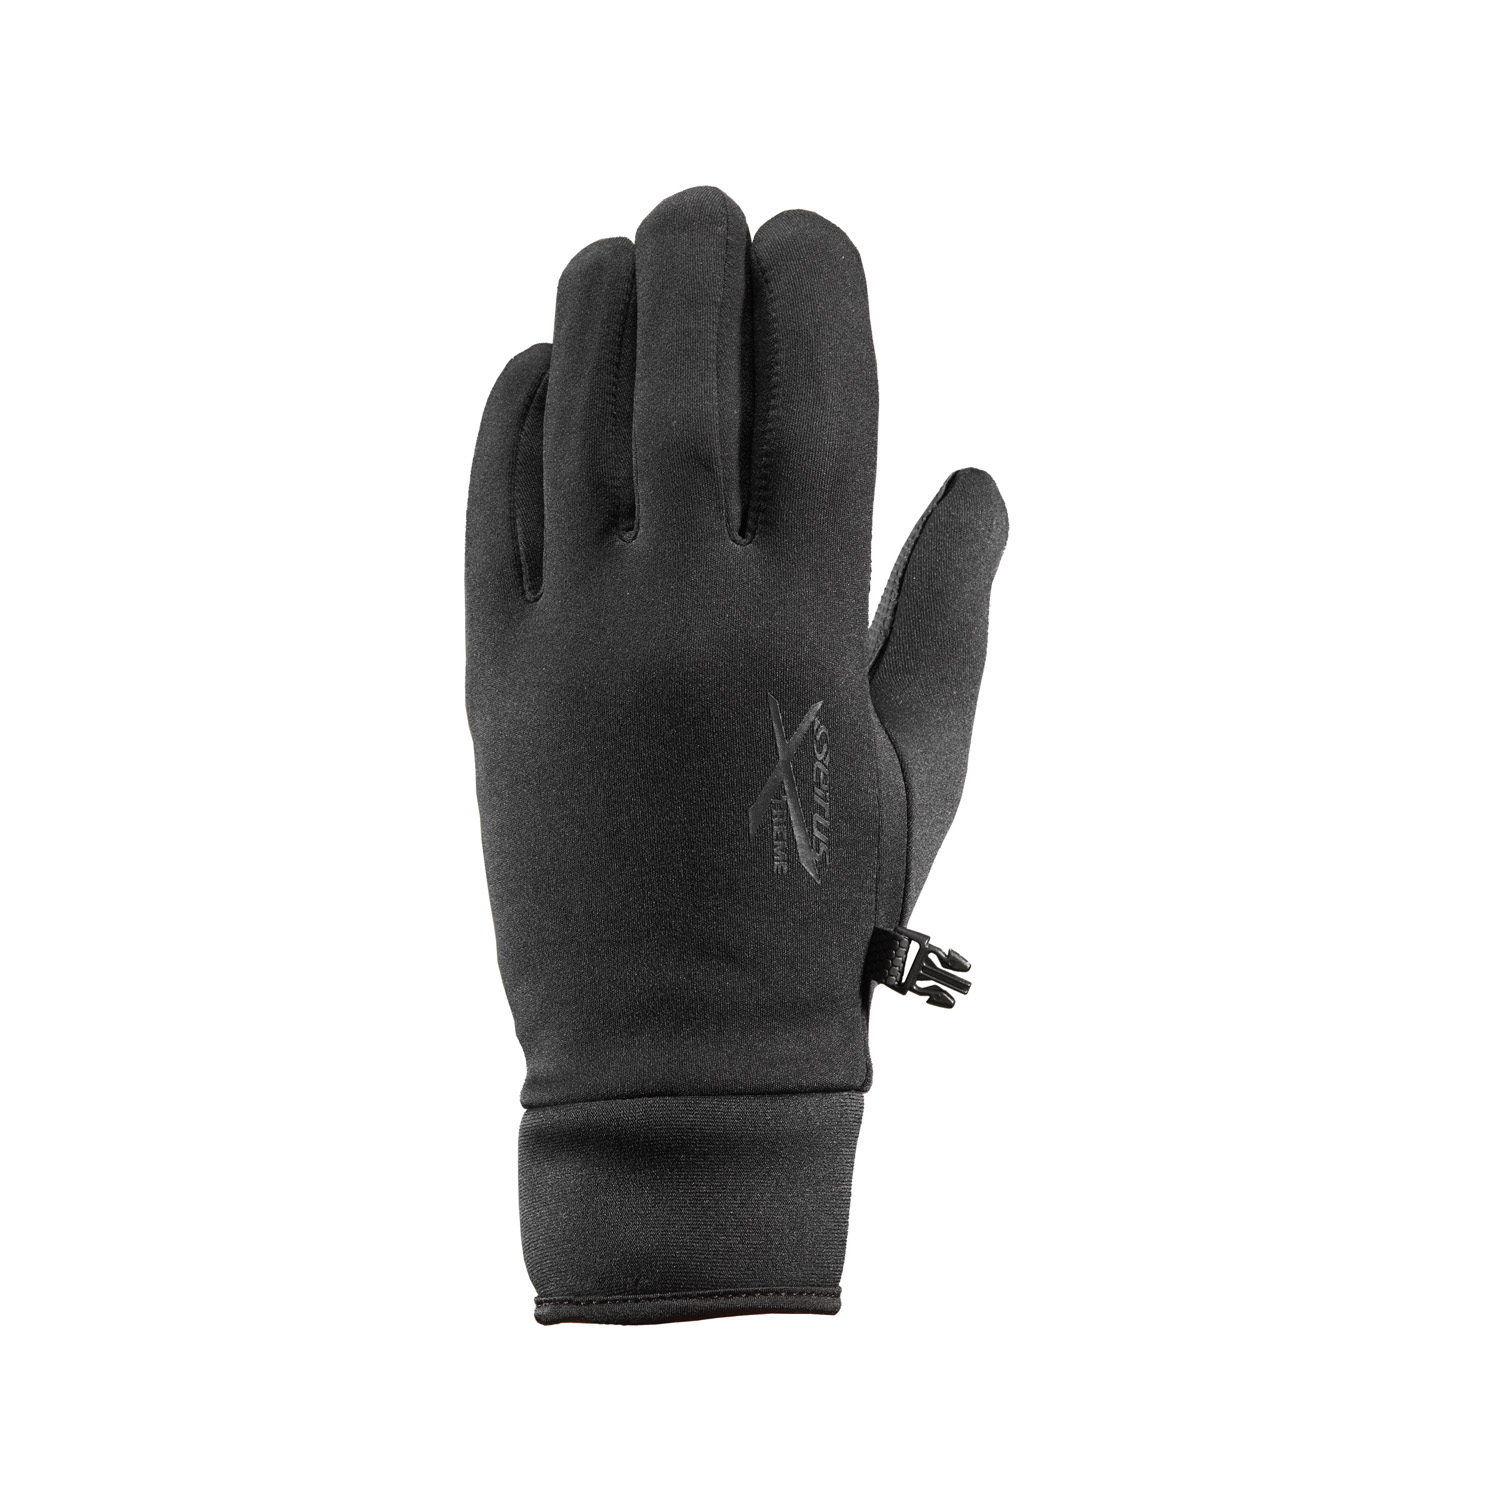 Seirus Xtreme All Weather Glove Mens Black Xl - 8011.1.0015